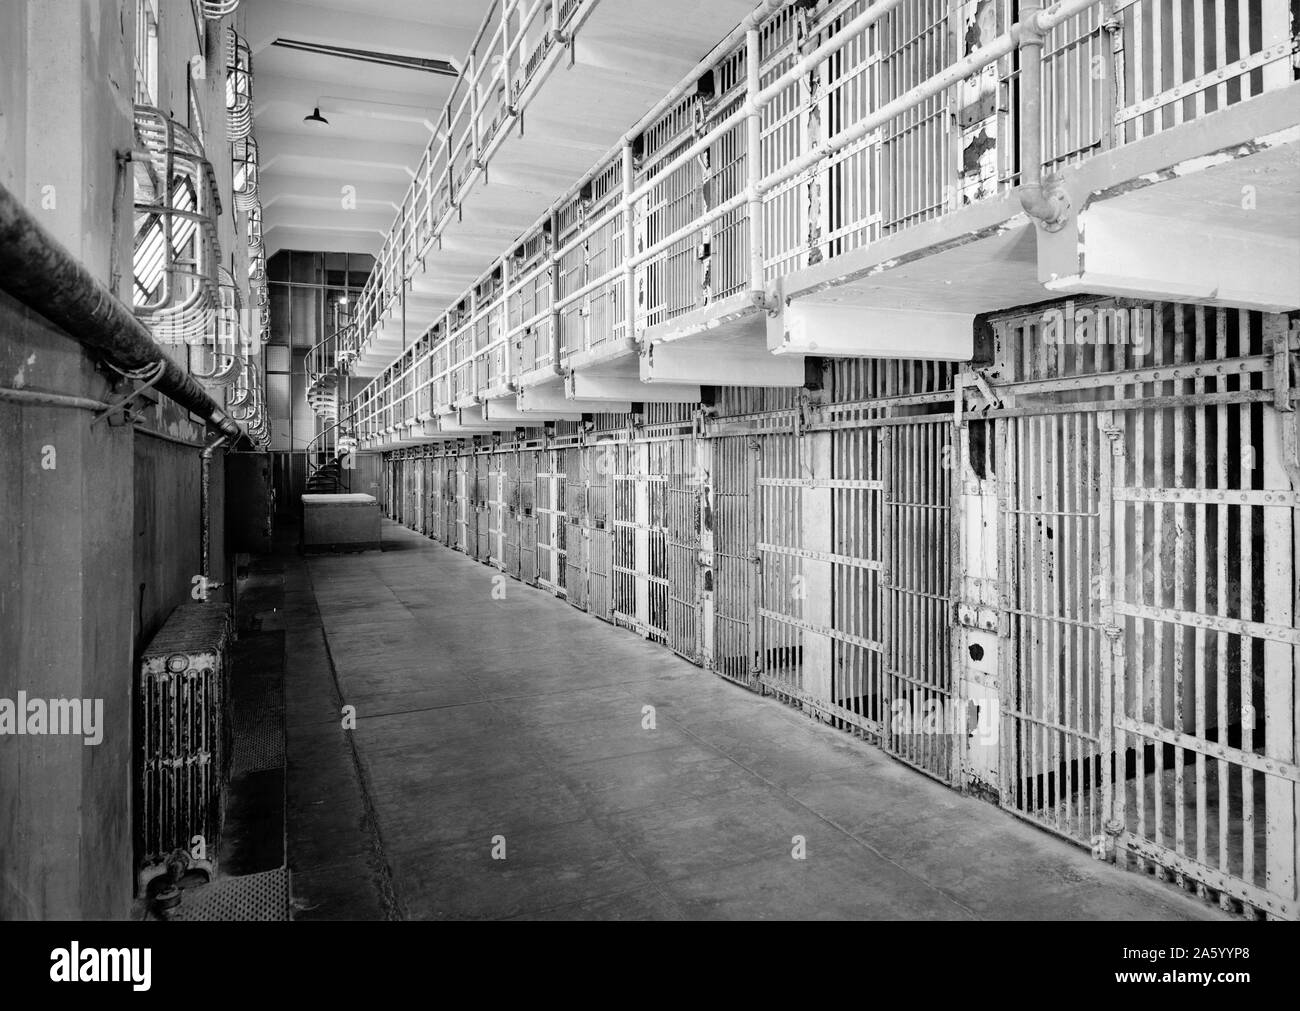 Southwest view on Cell Block 'A' in Alcatraz Prison, Alcatraz Island, San Francisco Bay, United States. Stock Photo